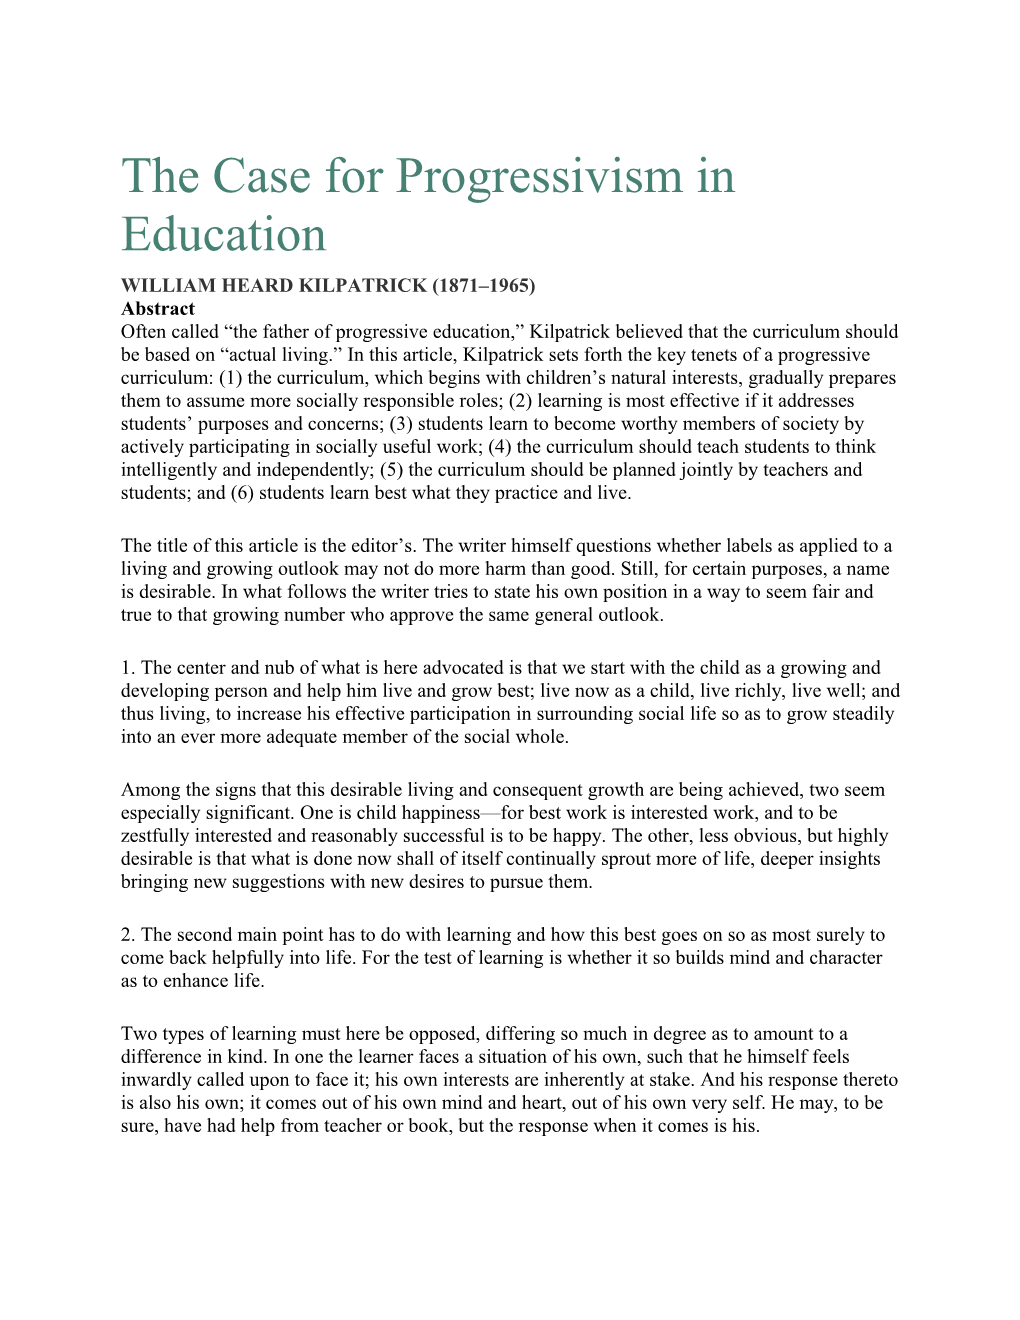 The Case for Progressivism in Education